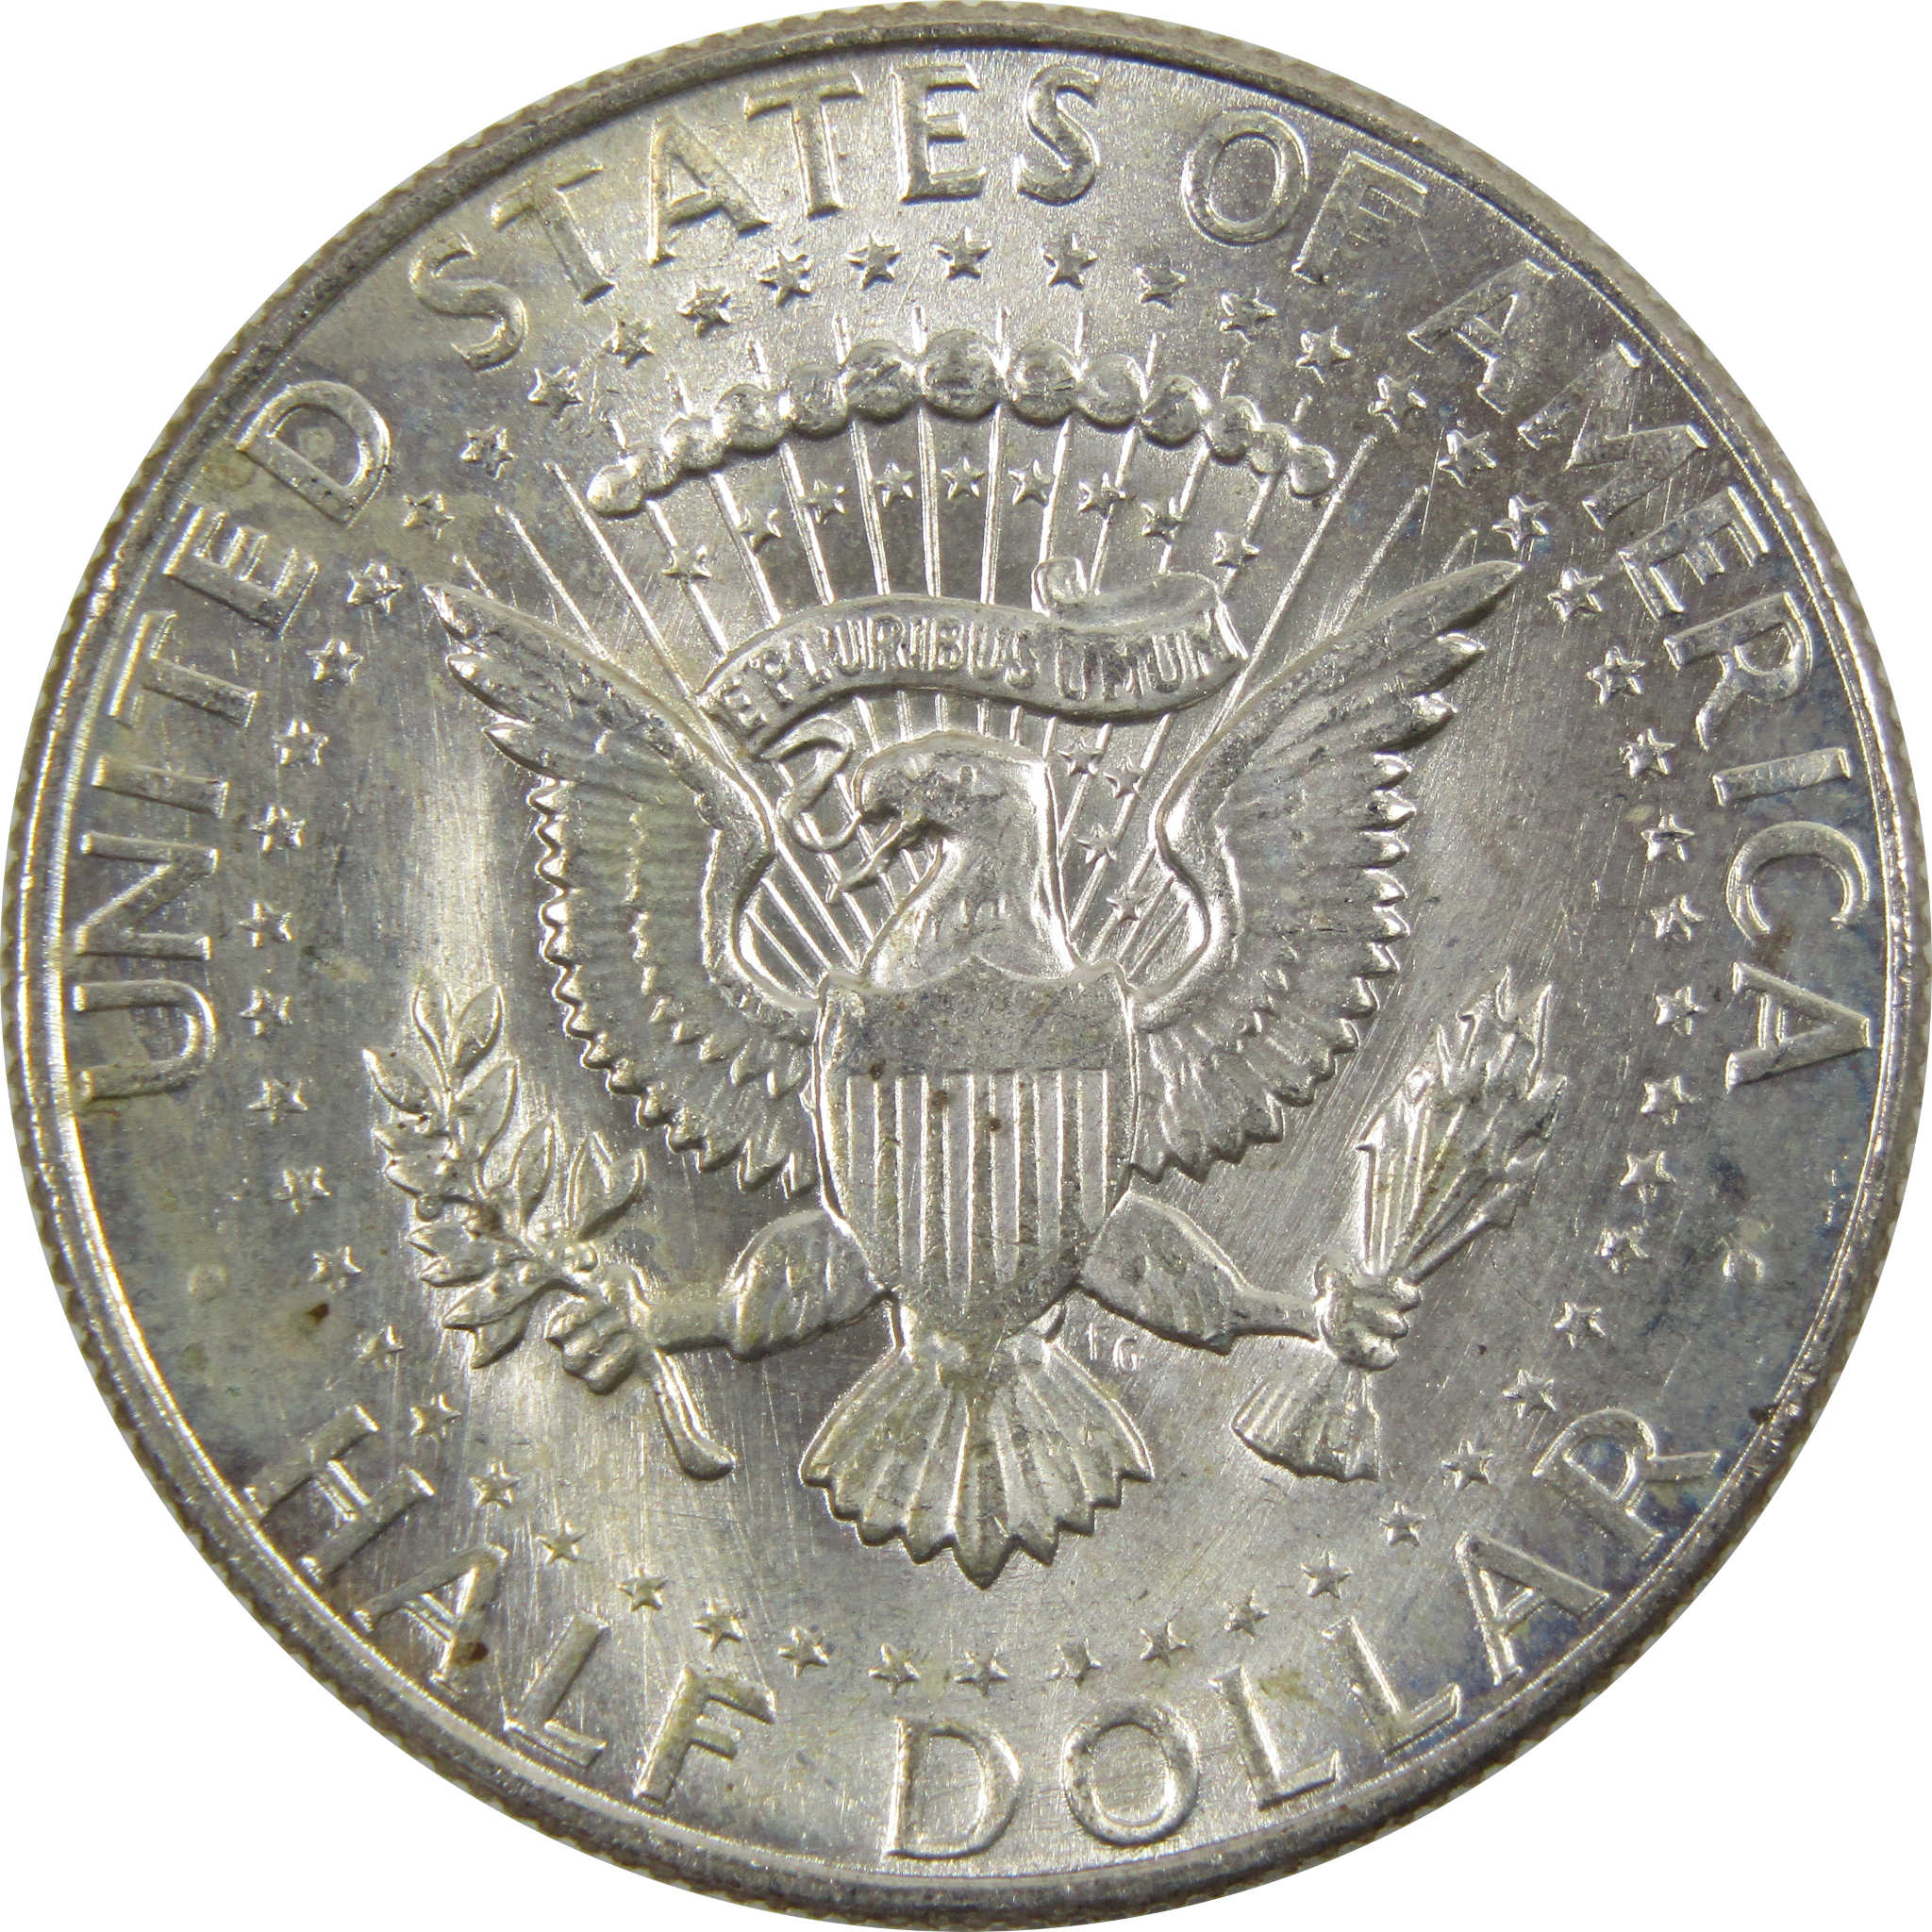 1968 D Kennedy Half Dollar AG About Good 40% Silver Clad 50c Coin